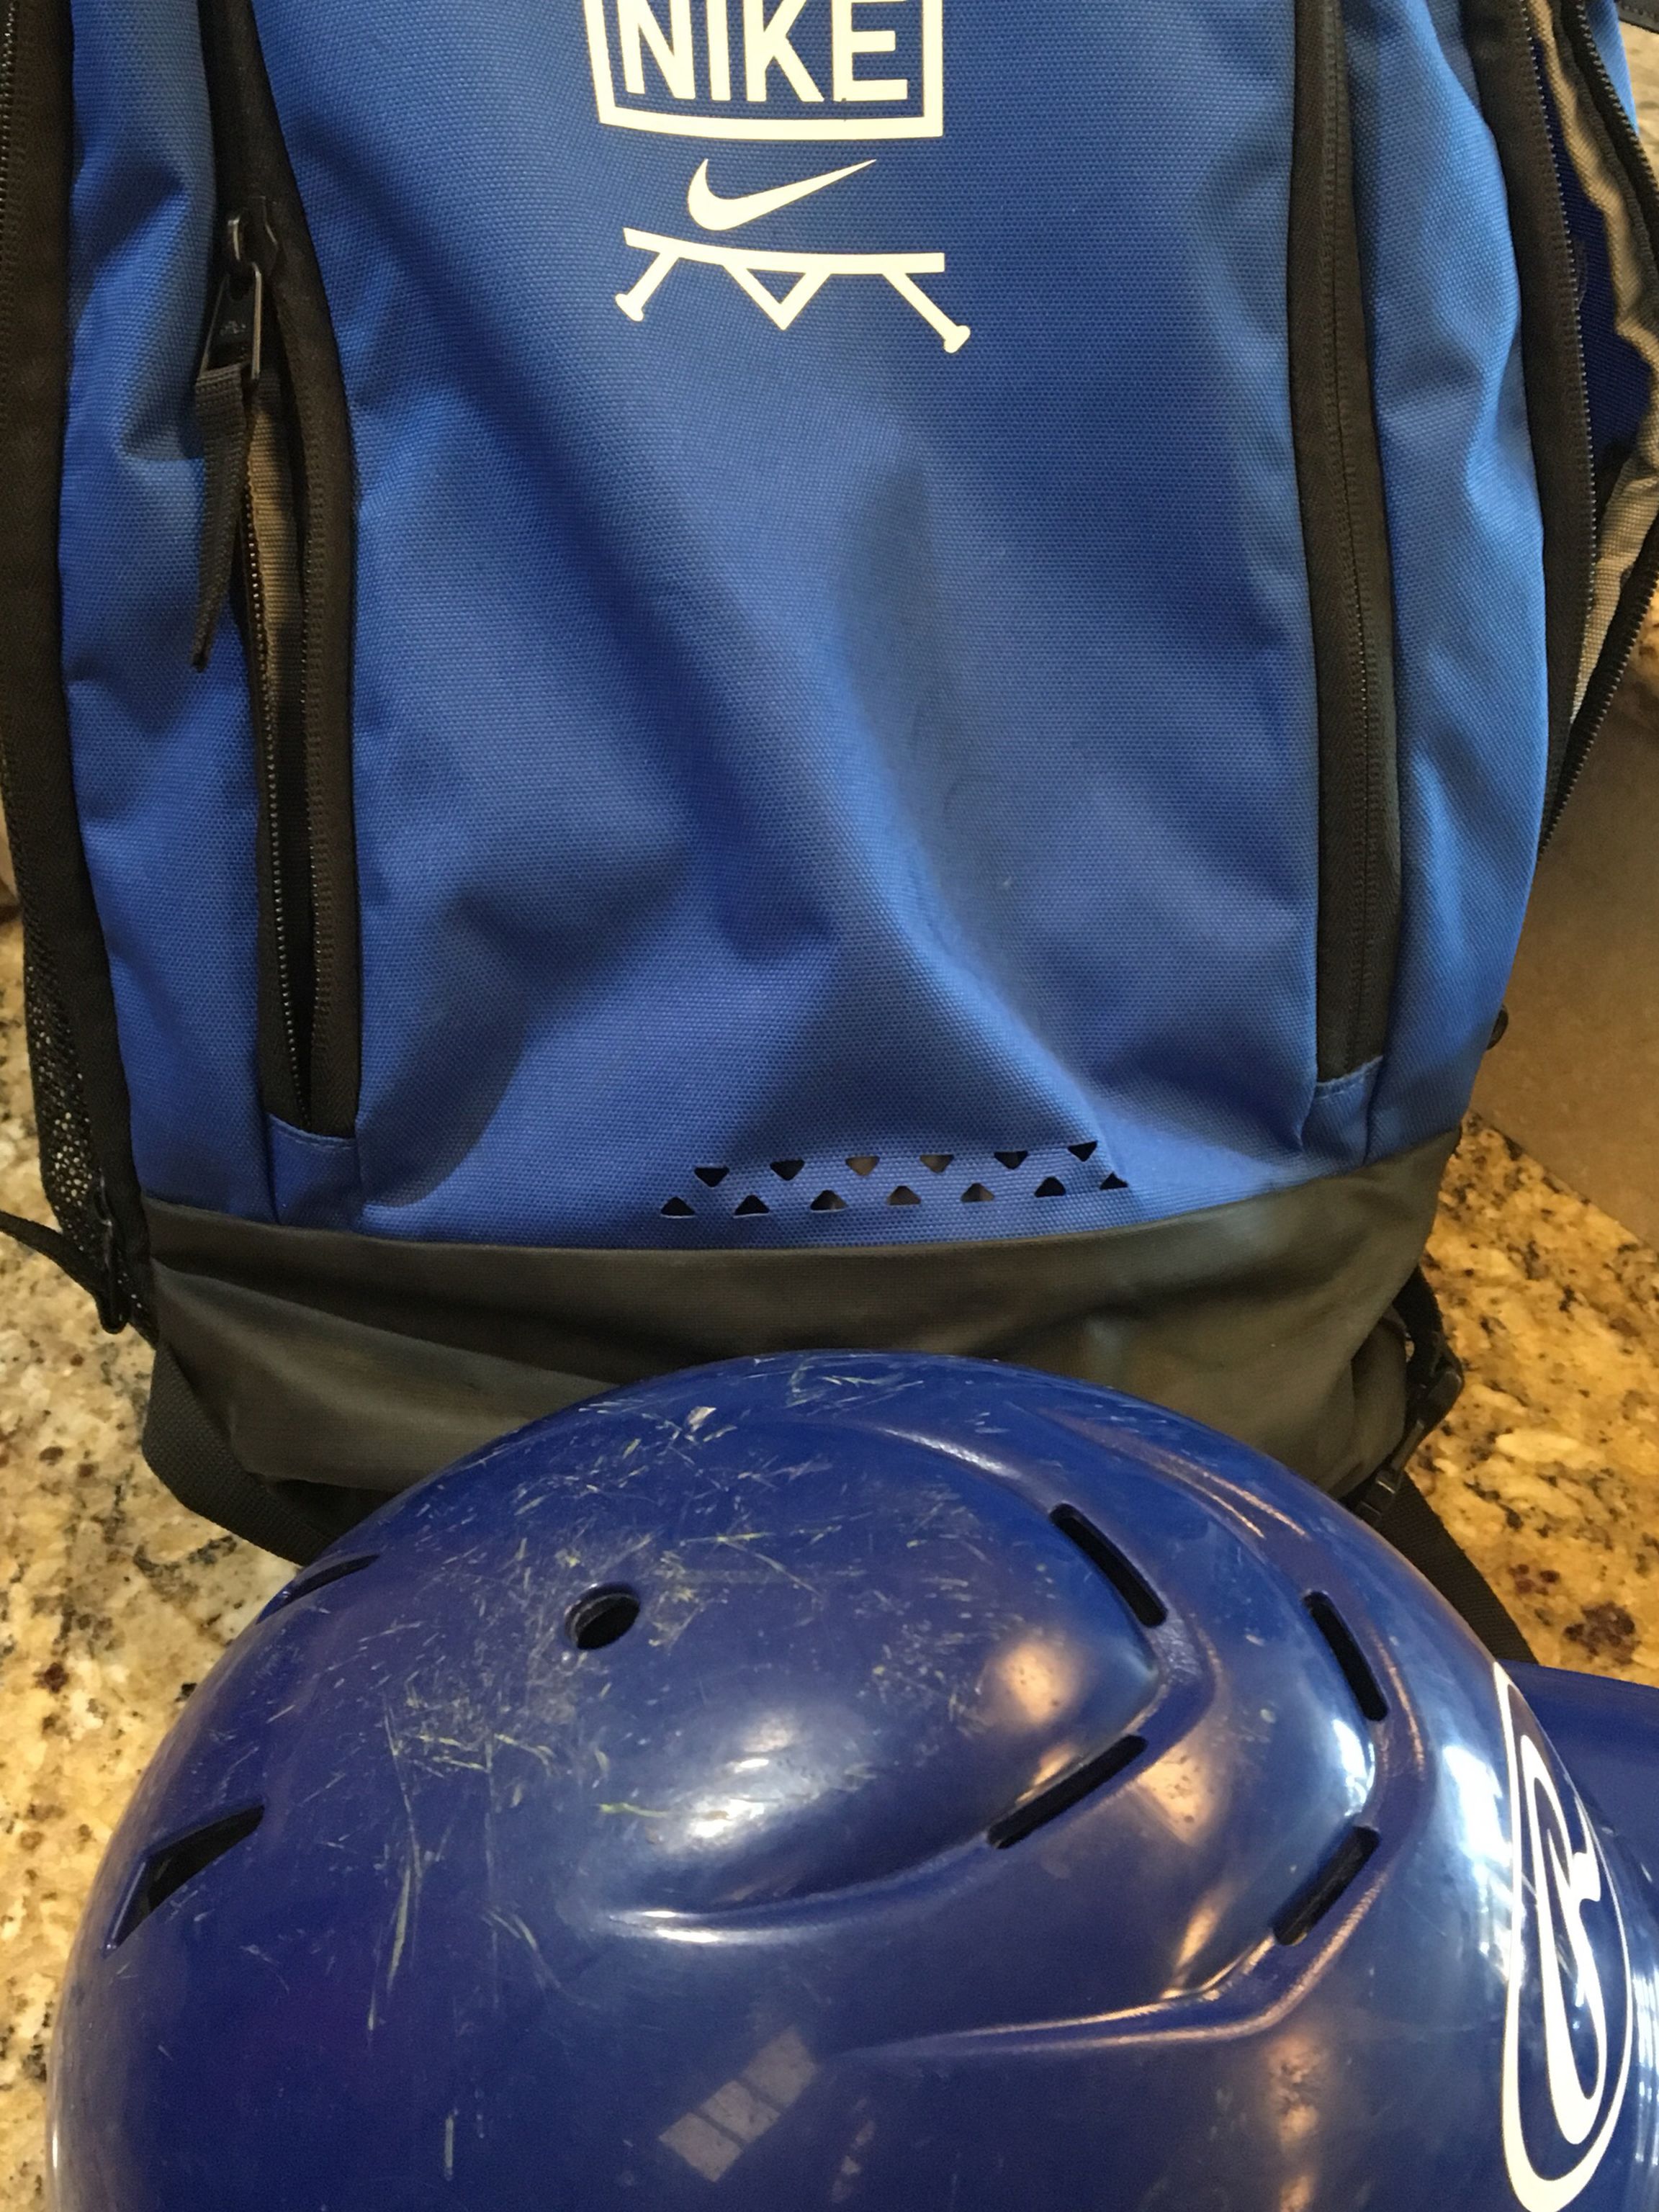 Lot boys baseball helmet and Nike backpack $30